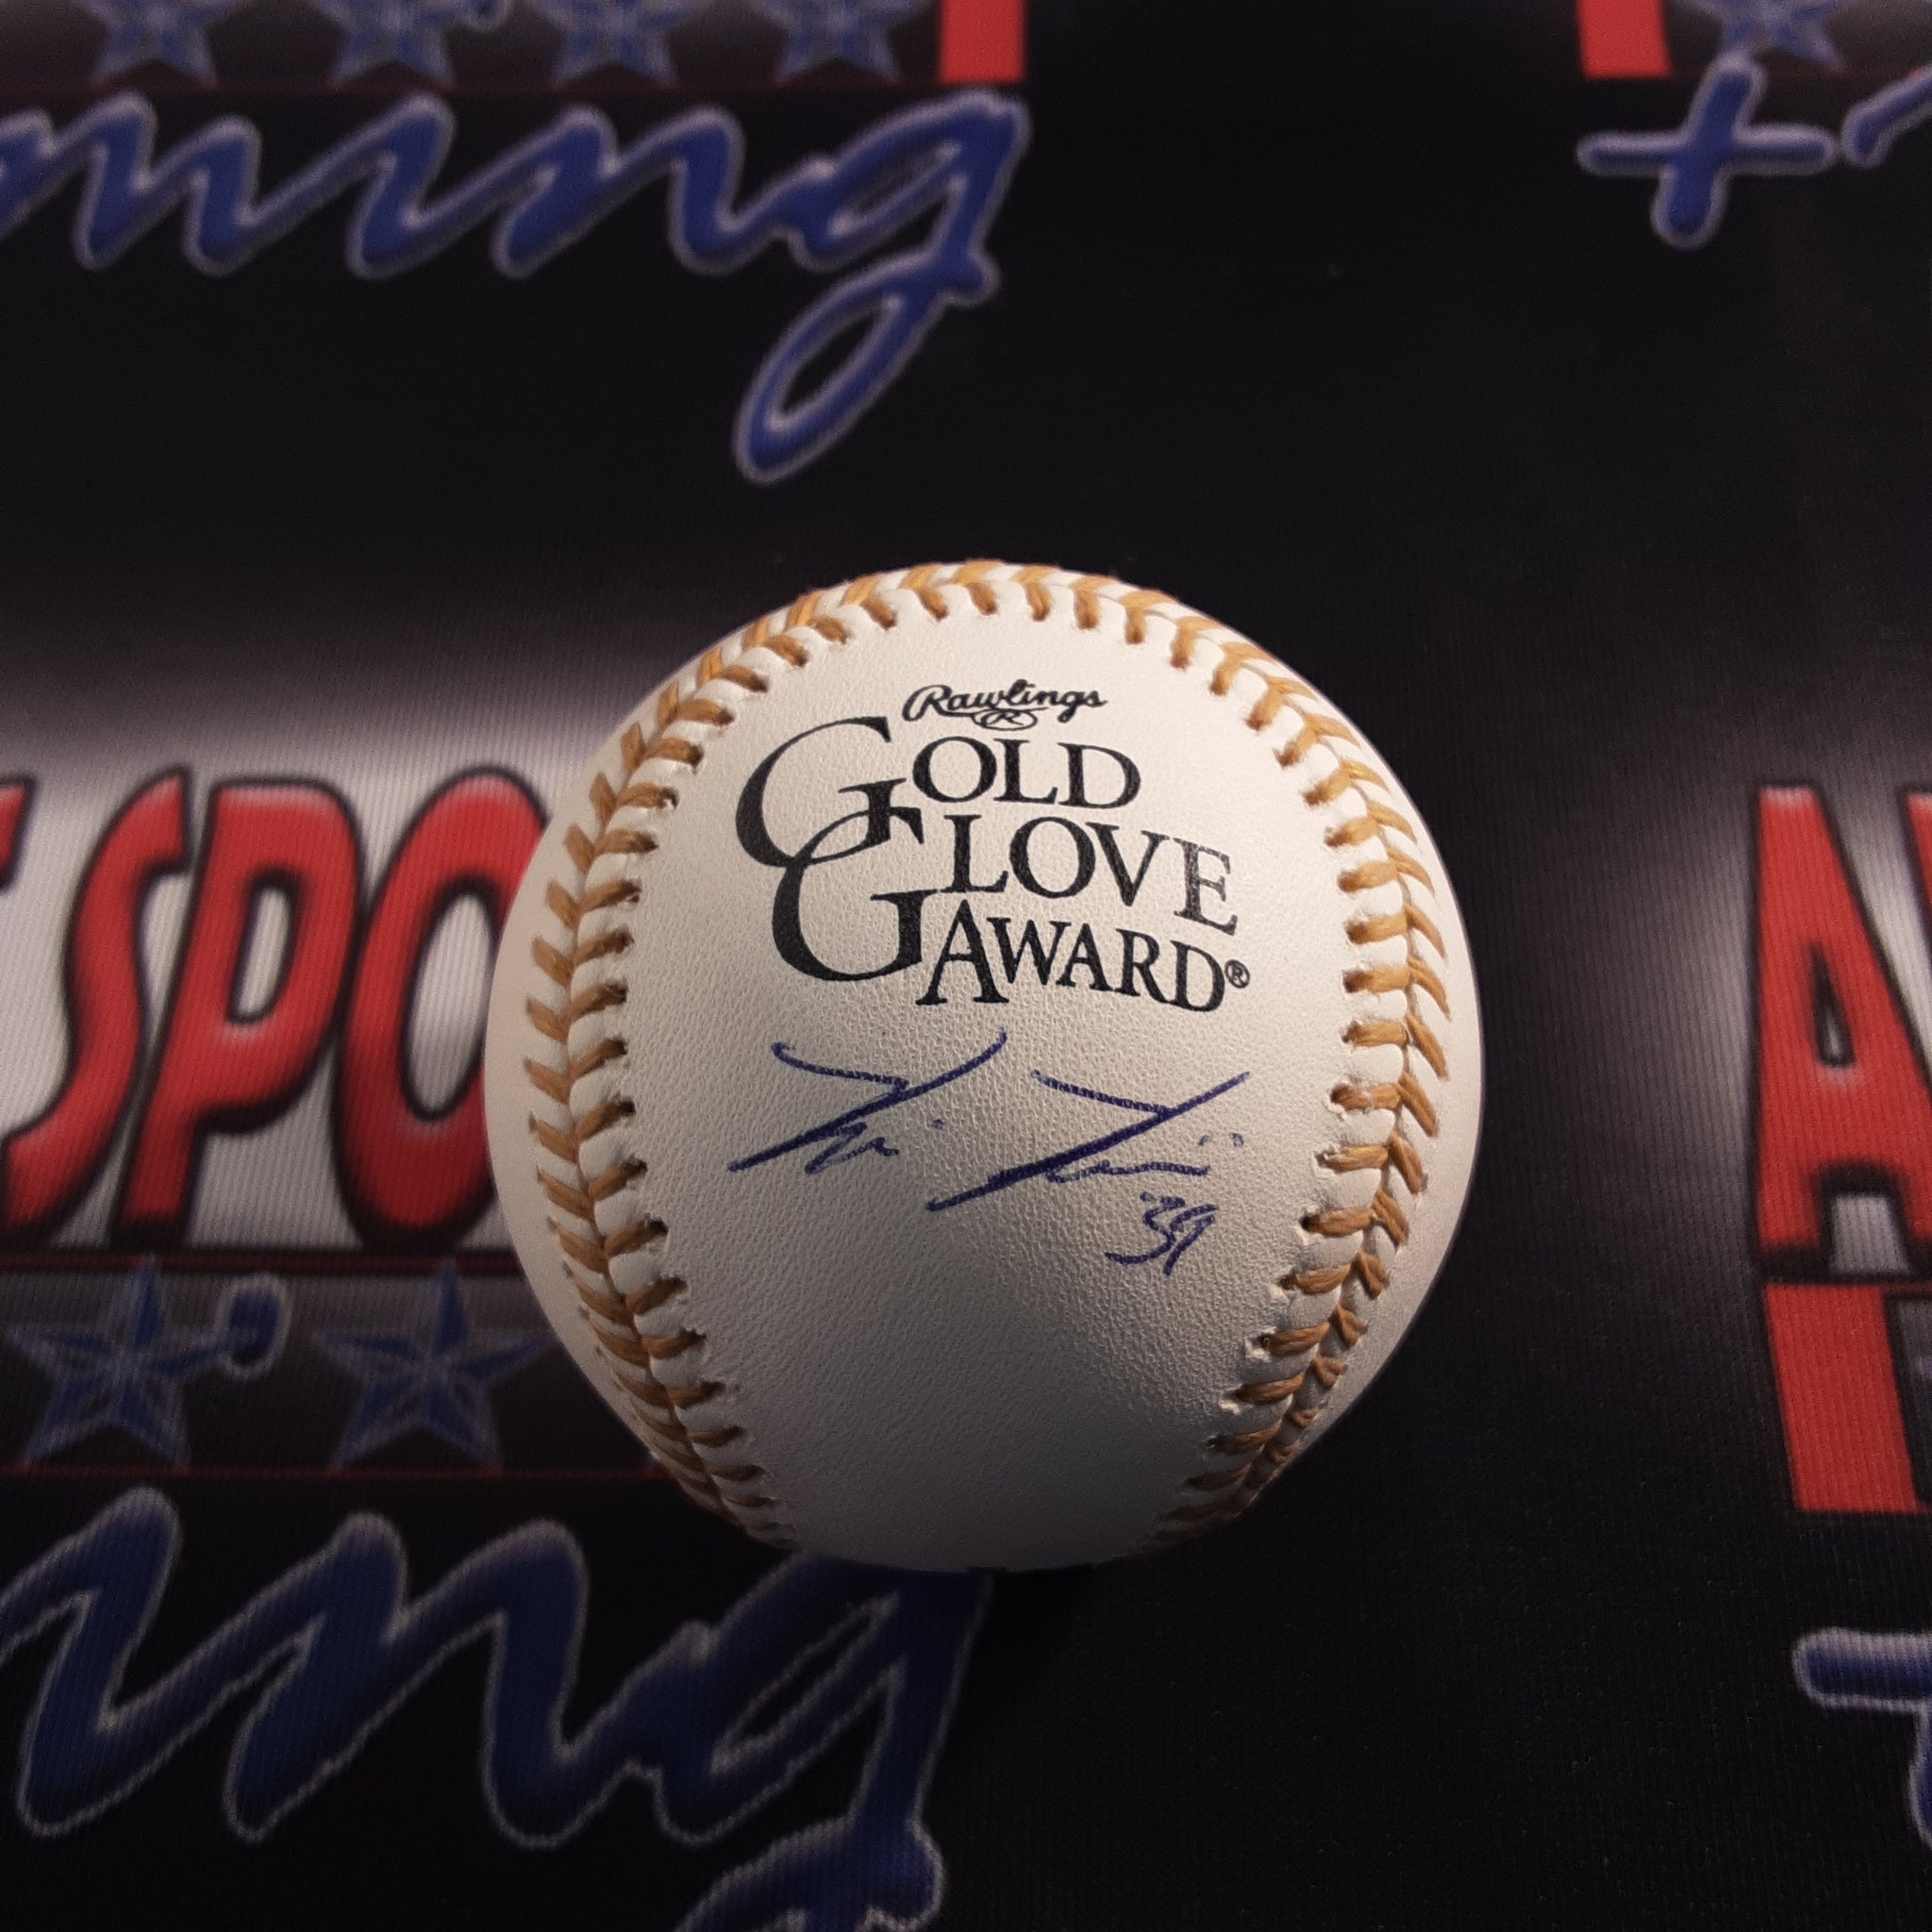 Kevin Kiermaier Authentic Signed Baseball Autographed JSA.